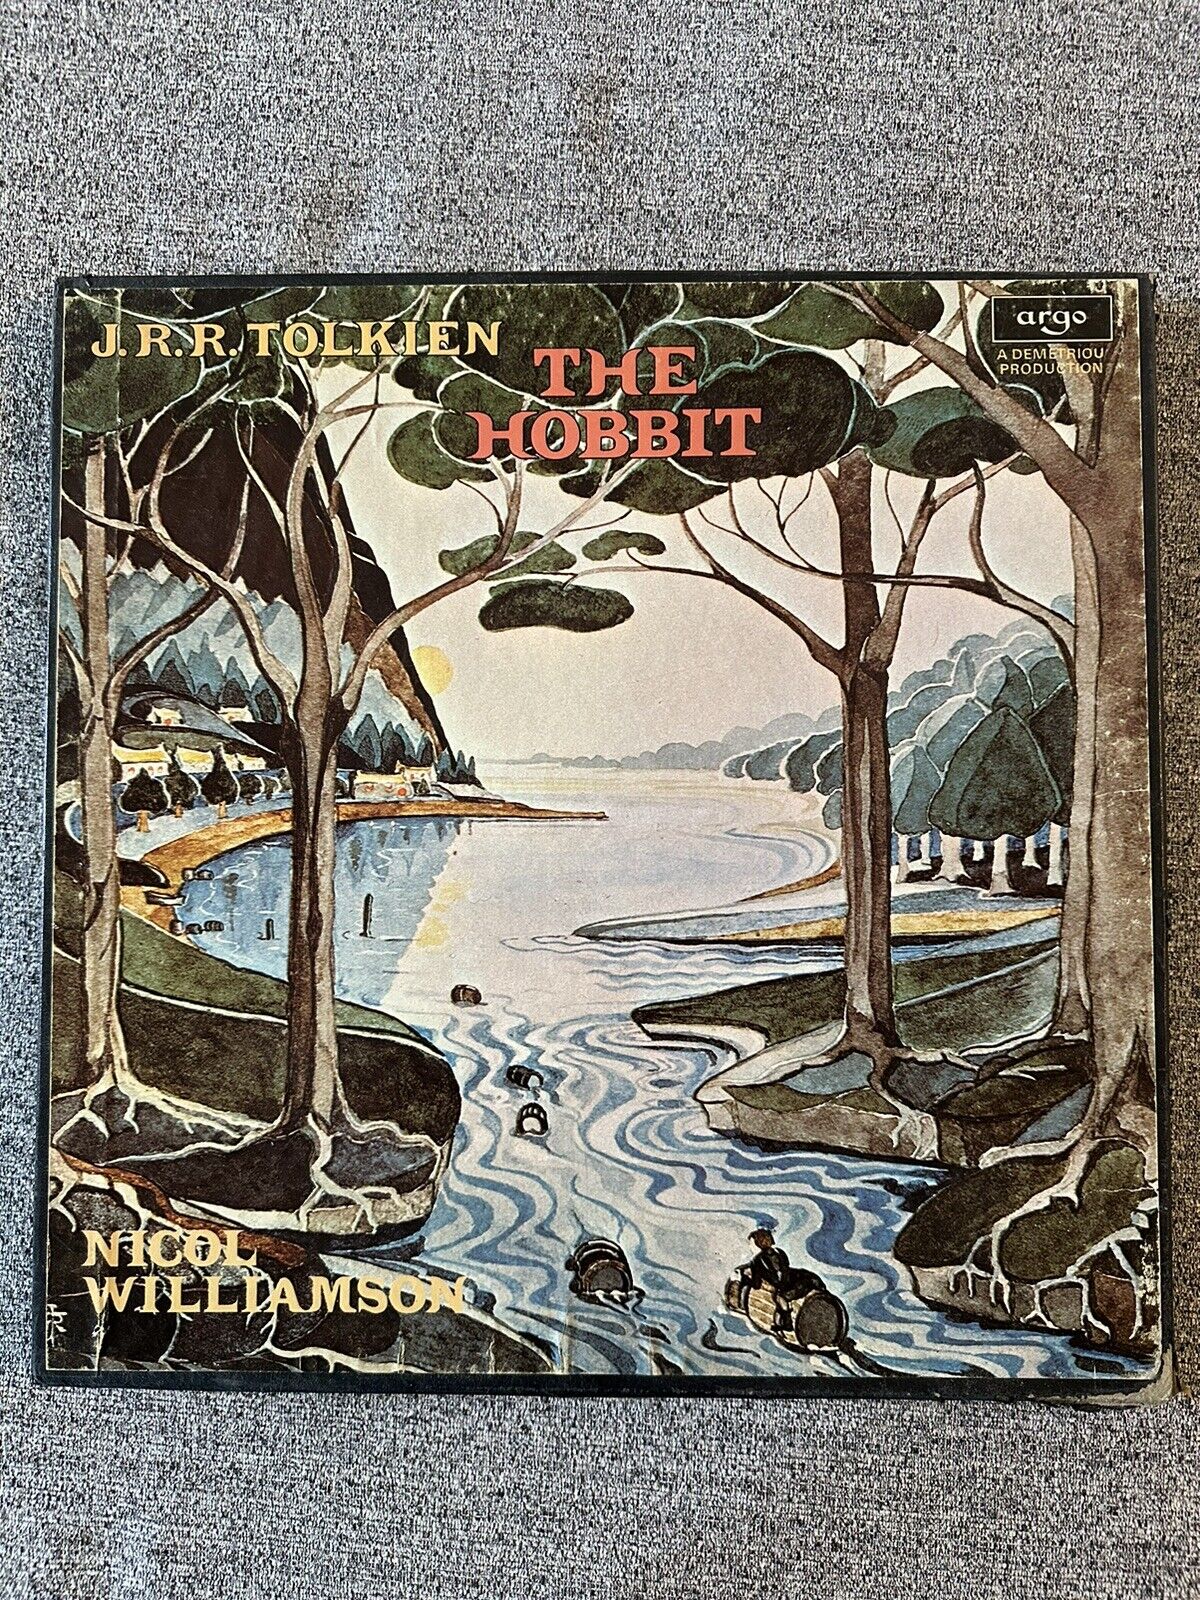 JRR Tolkien The Hobbit 1974 4 LP Record Box Set Argo Nicol Williamson